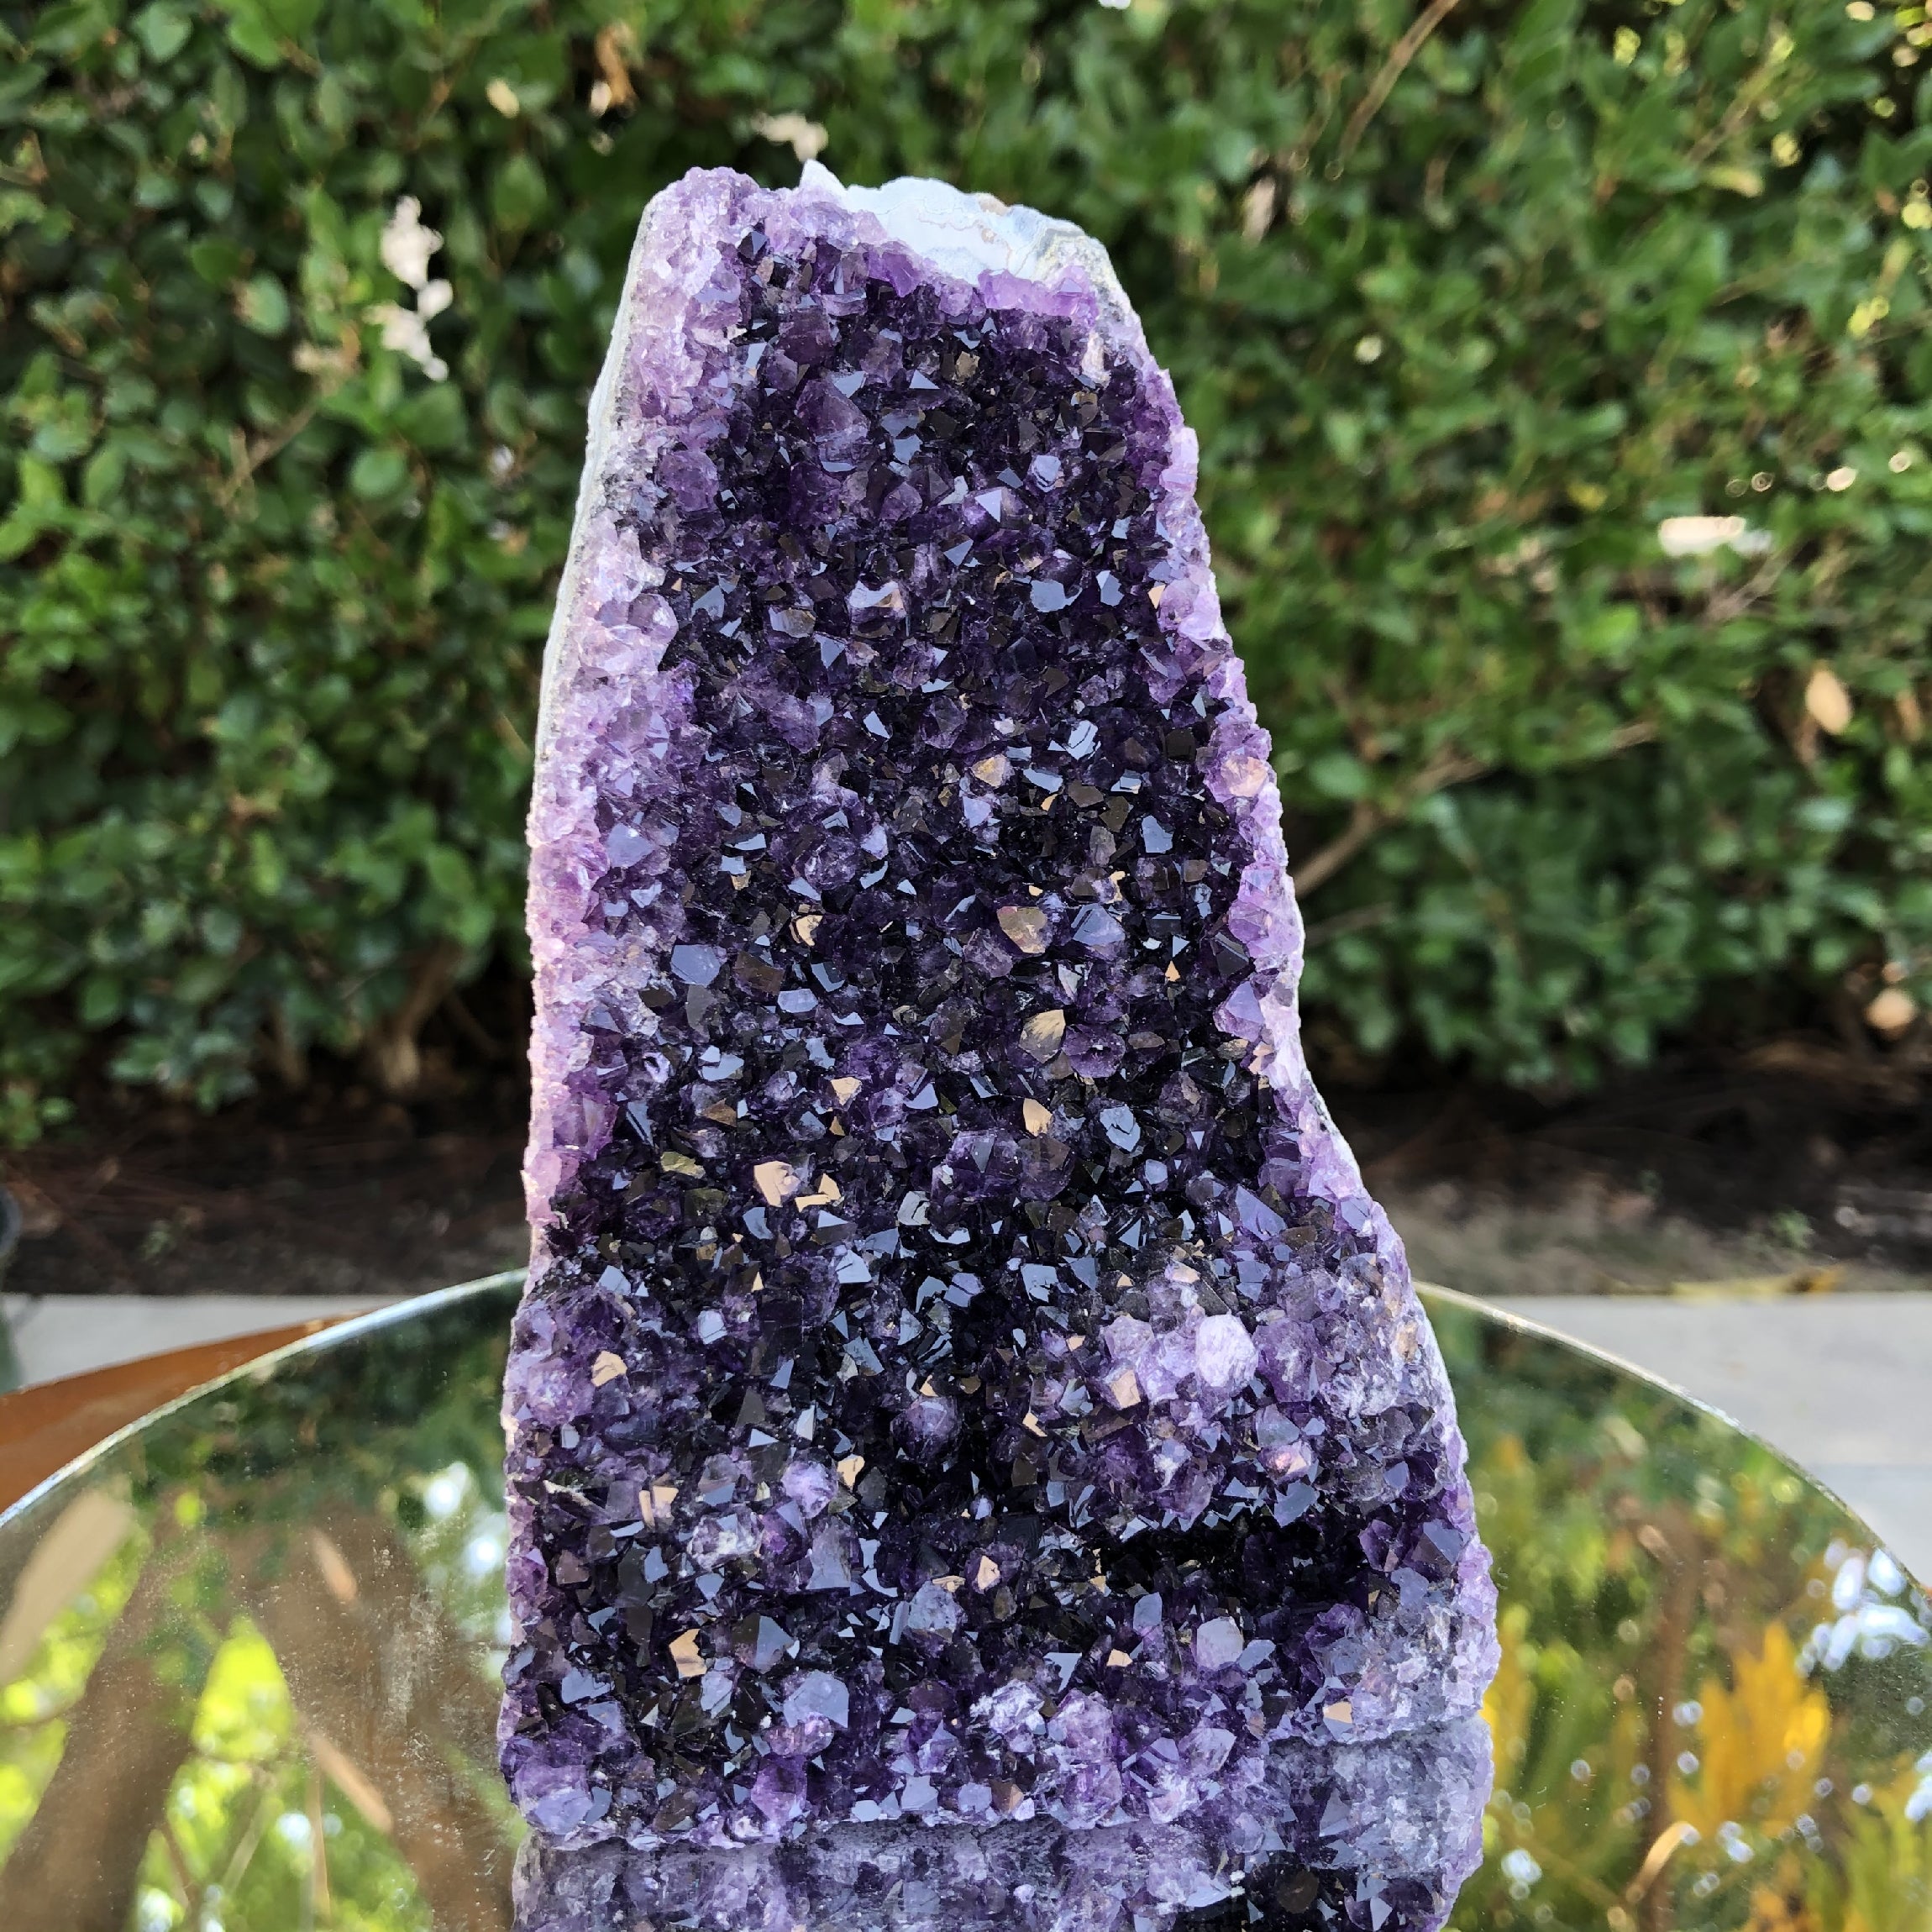 884g 14x9x9cm Purple Amethyst Geode from Uruguay